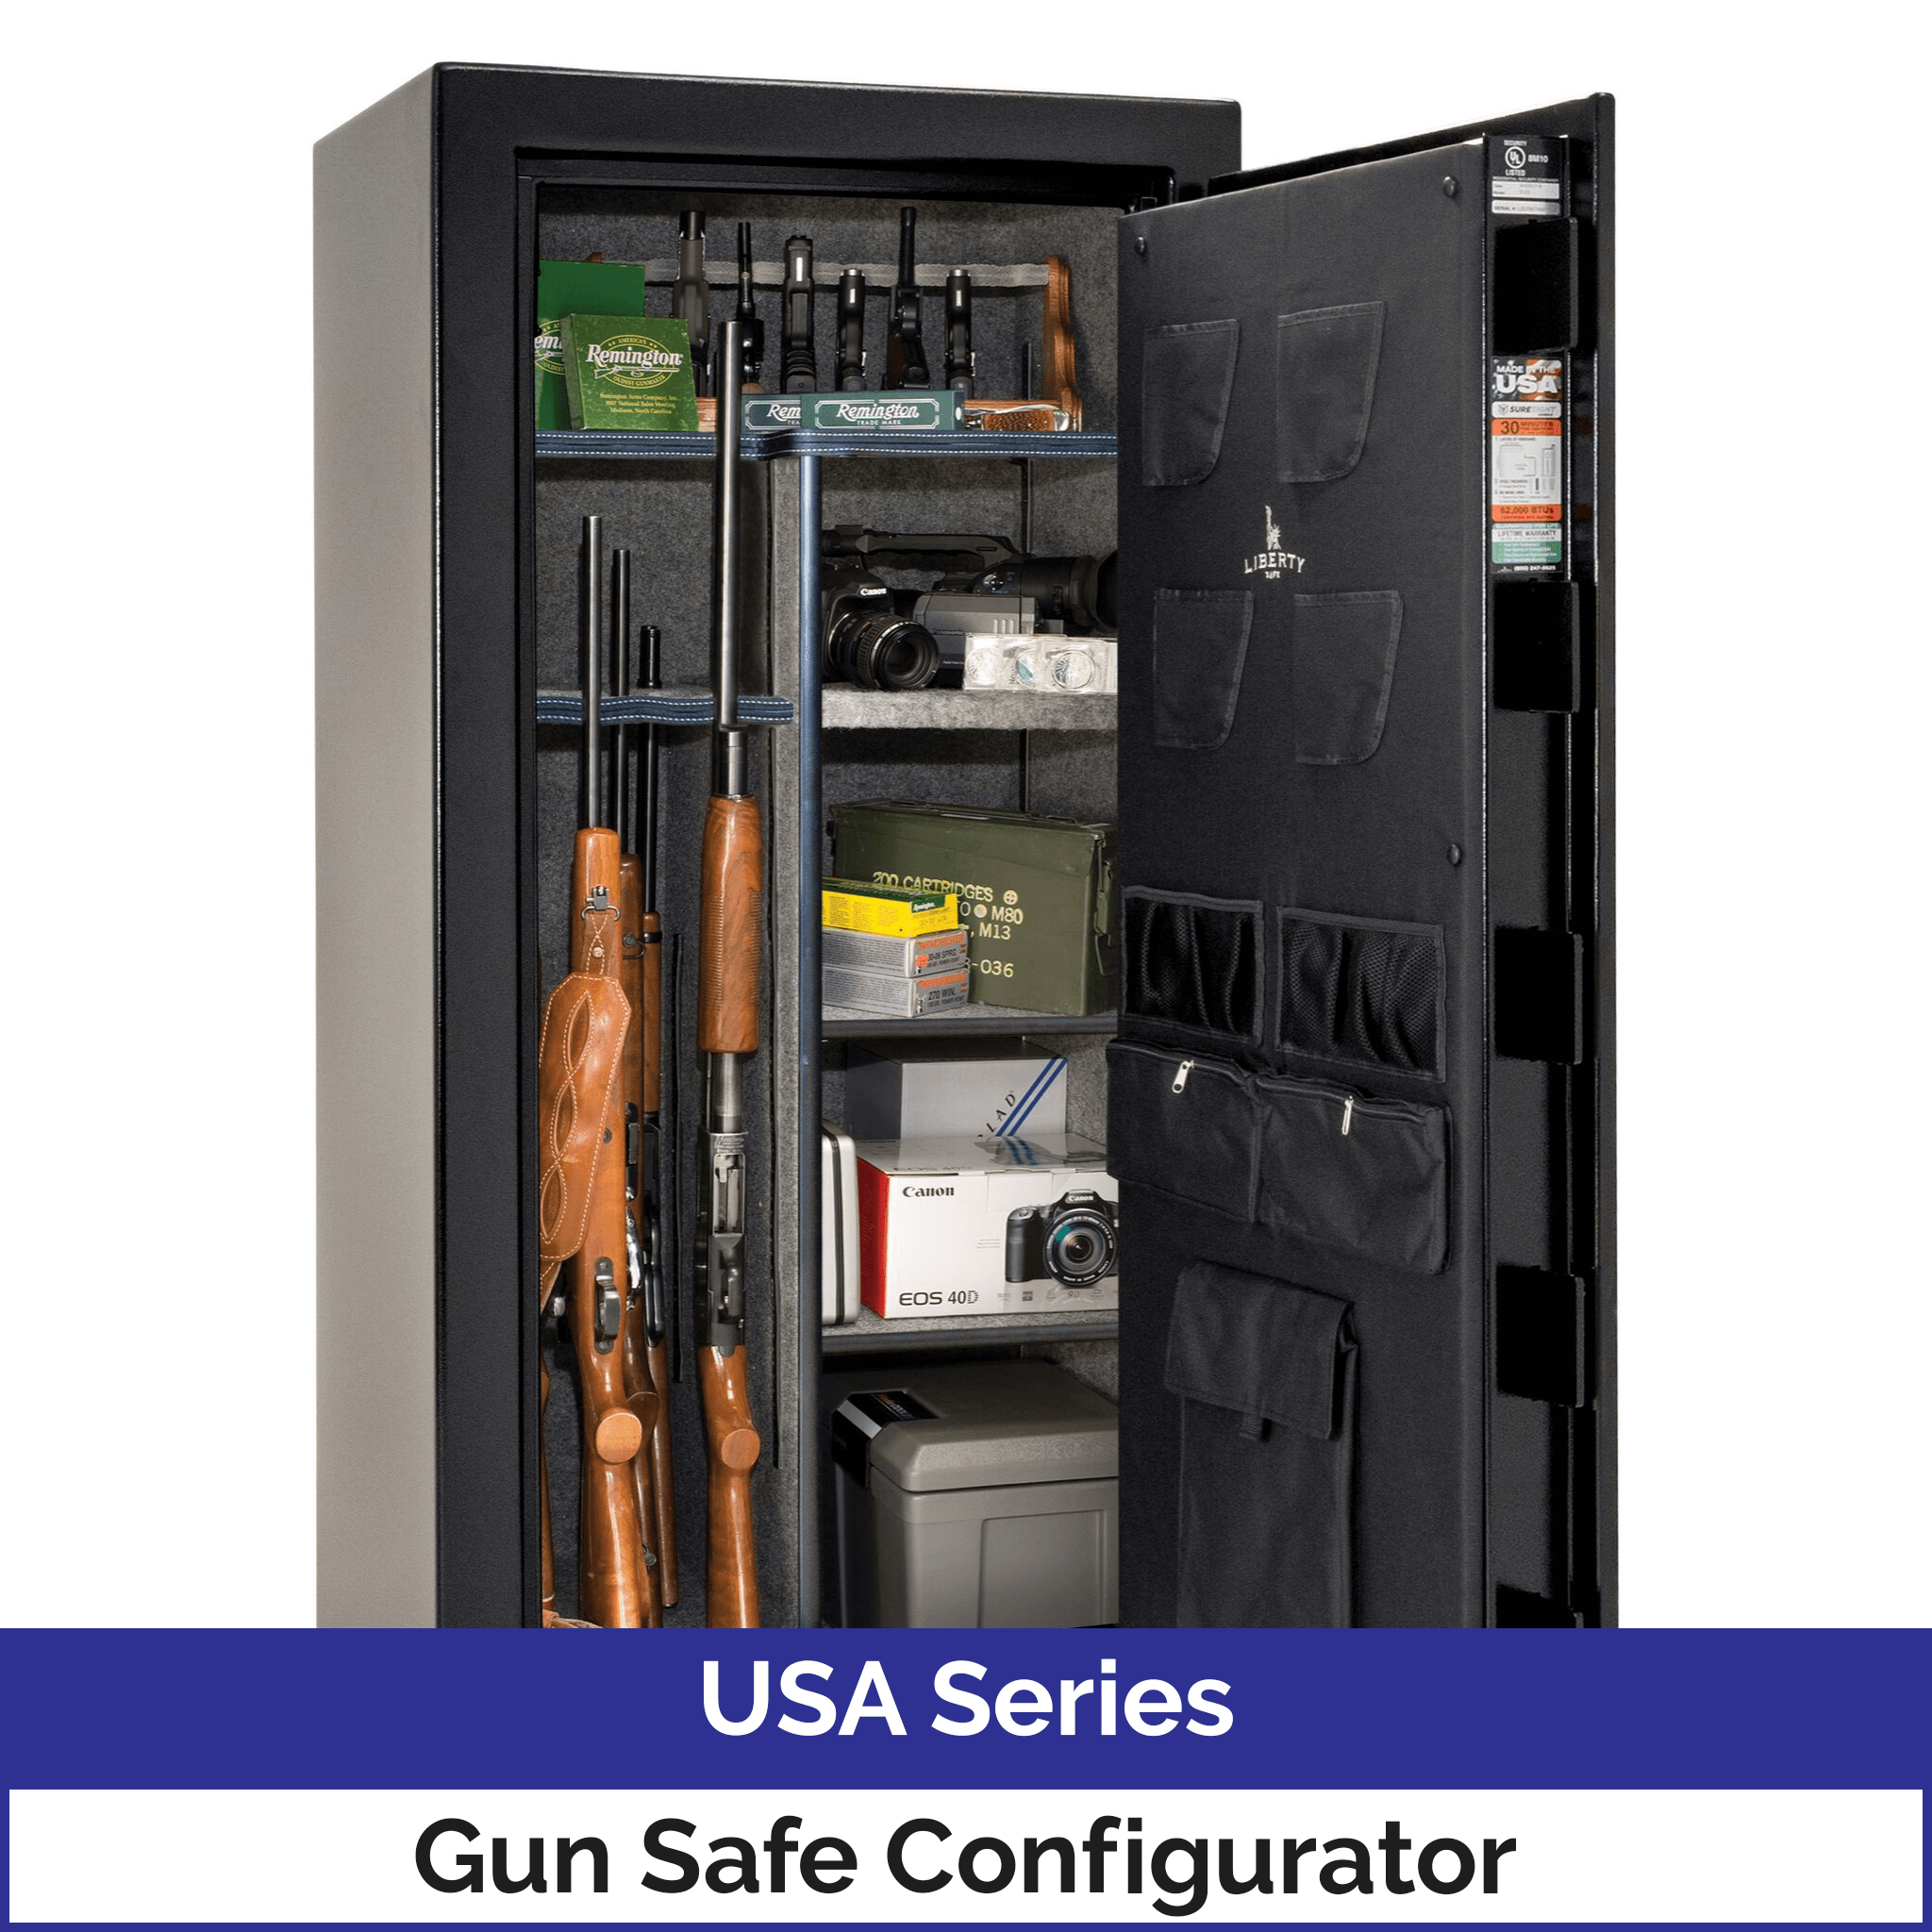 Liberty USA Series Gun Safe Configurator, image 2 